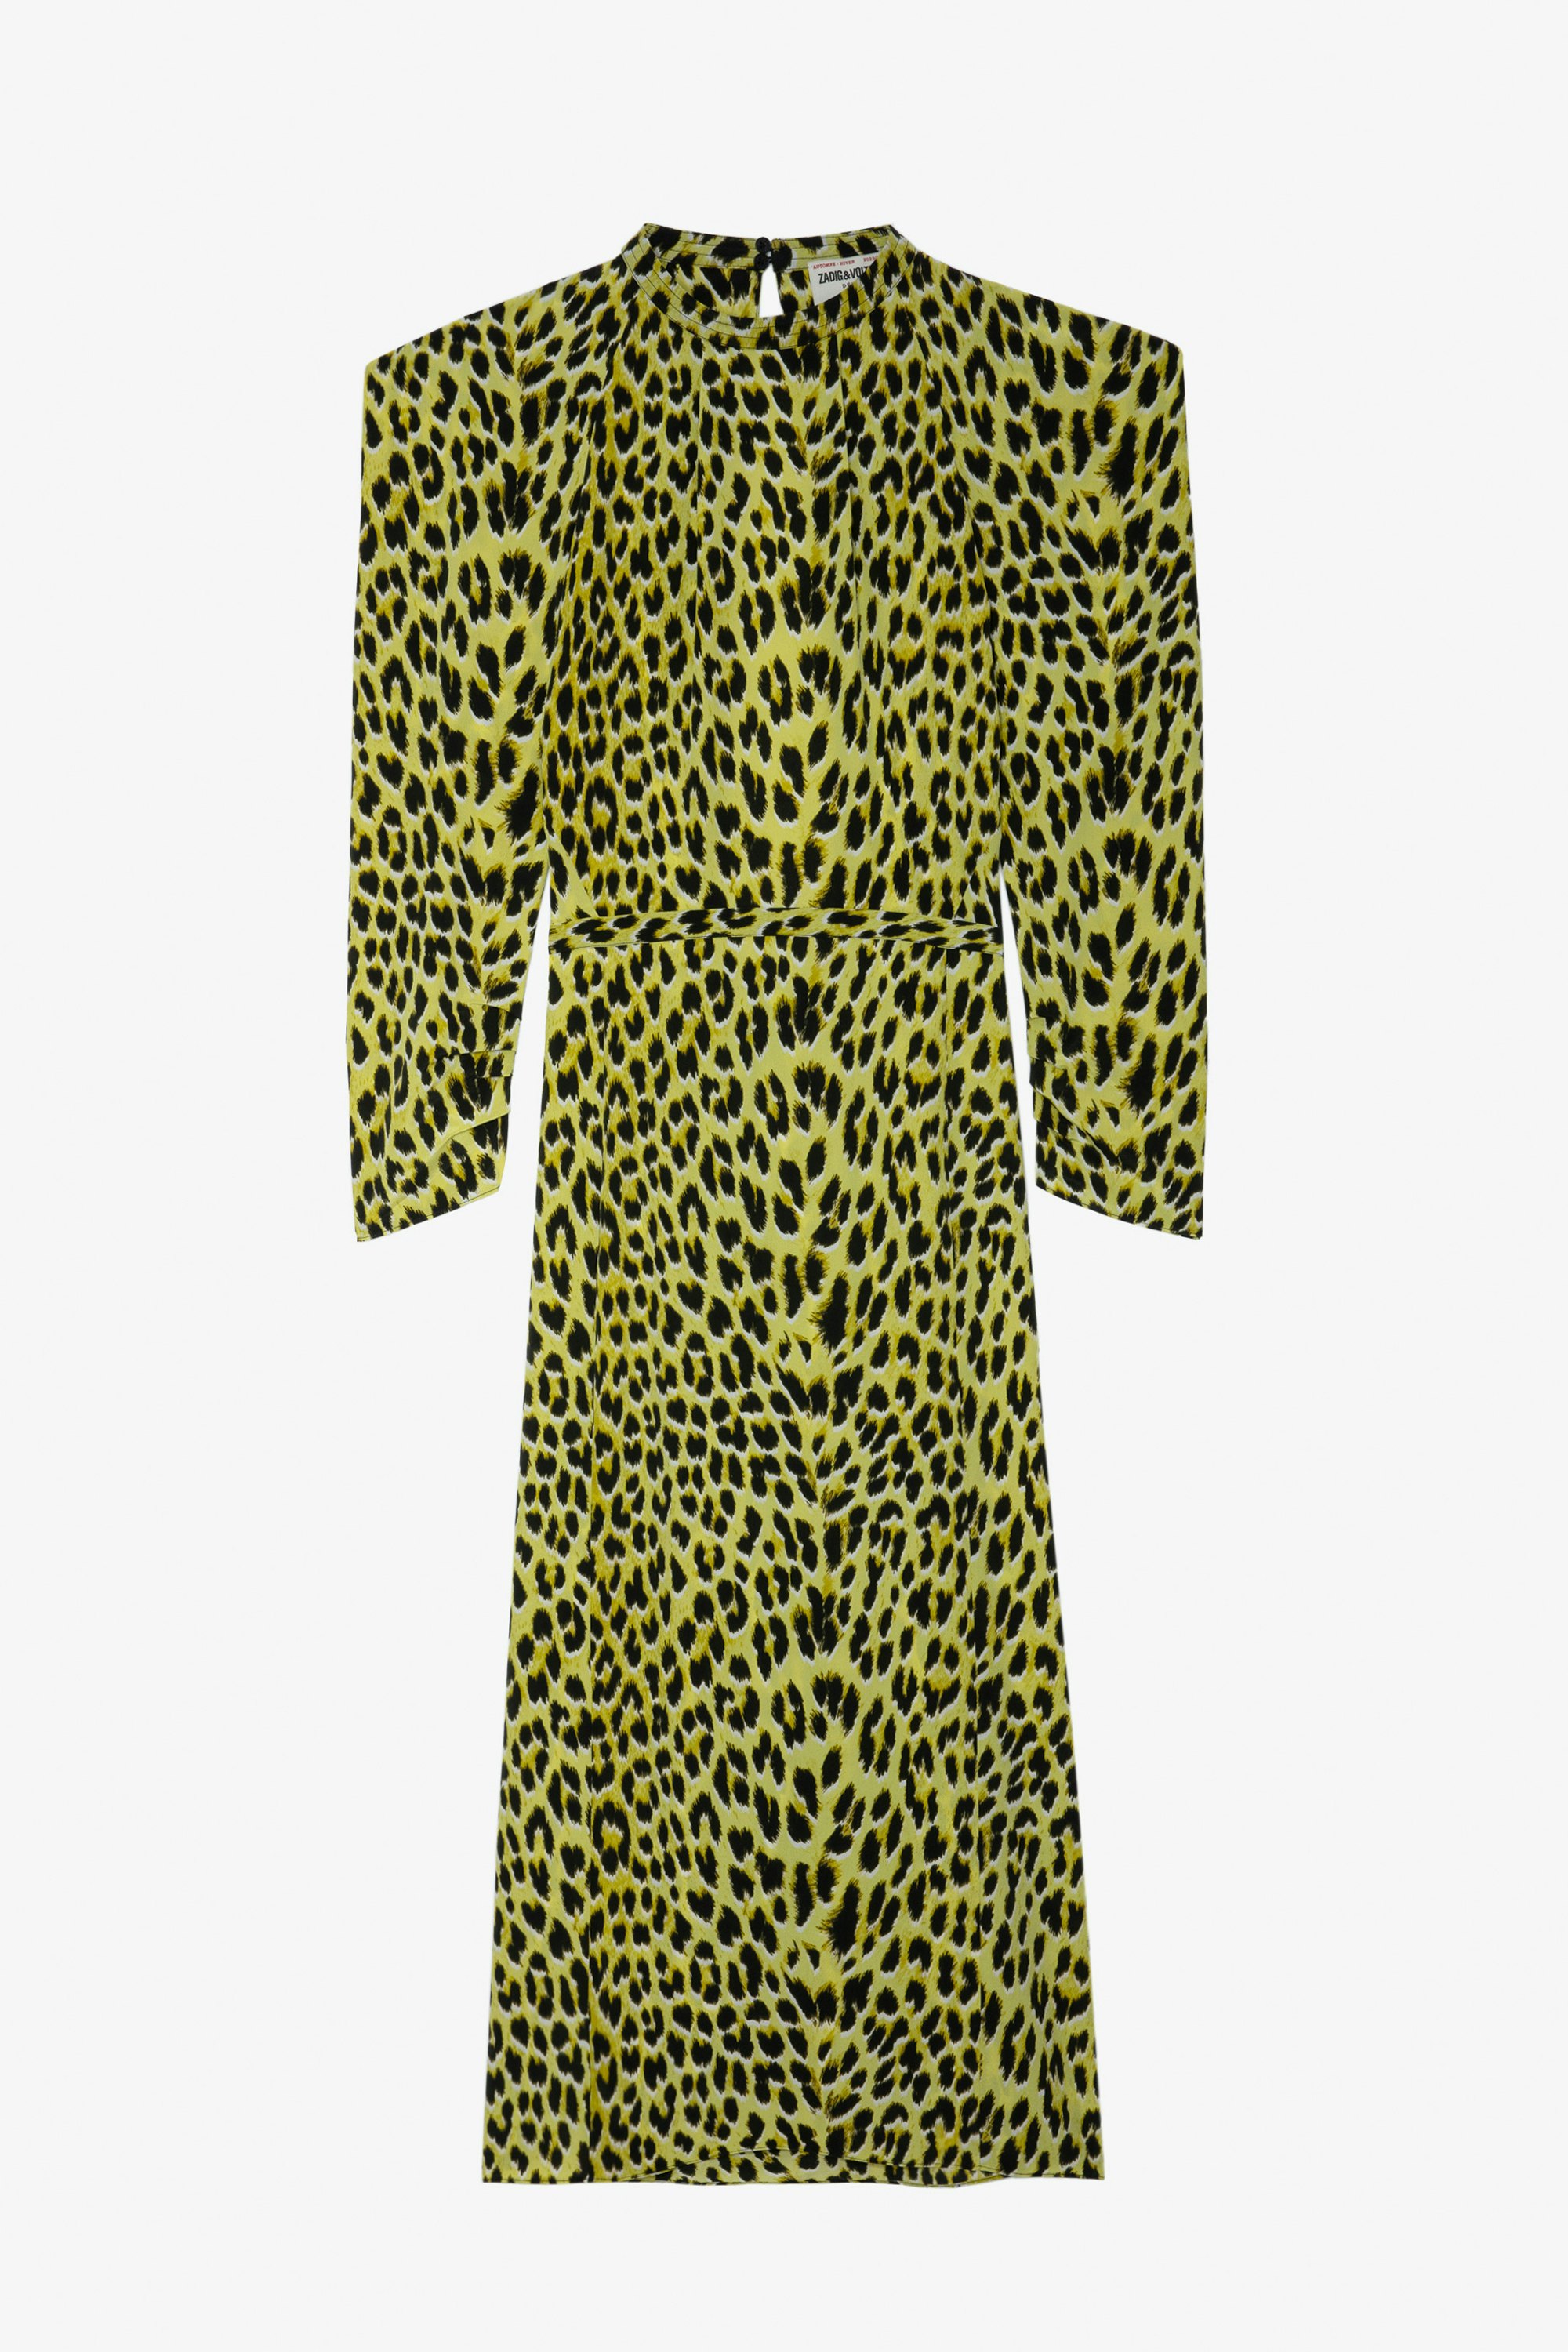 Racyl Leopard Silk Dress - Women’s long yellow leopard-print silk dress with shoulder pads, belt and cut-out on back.